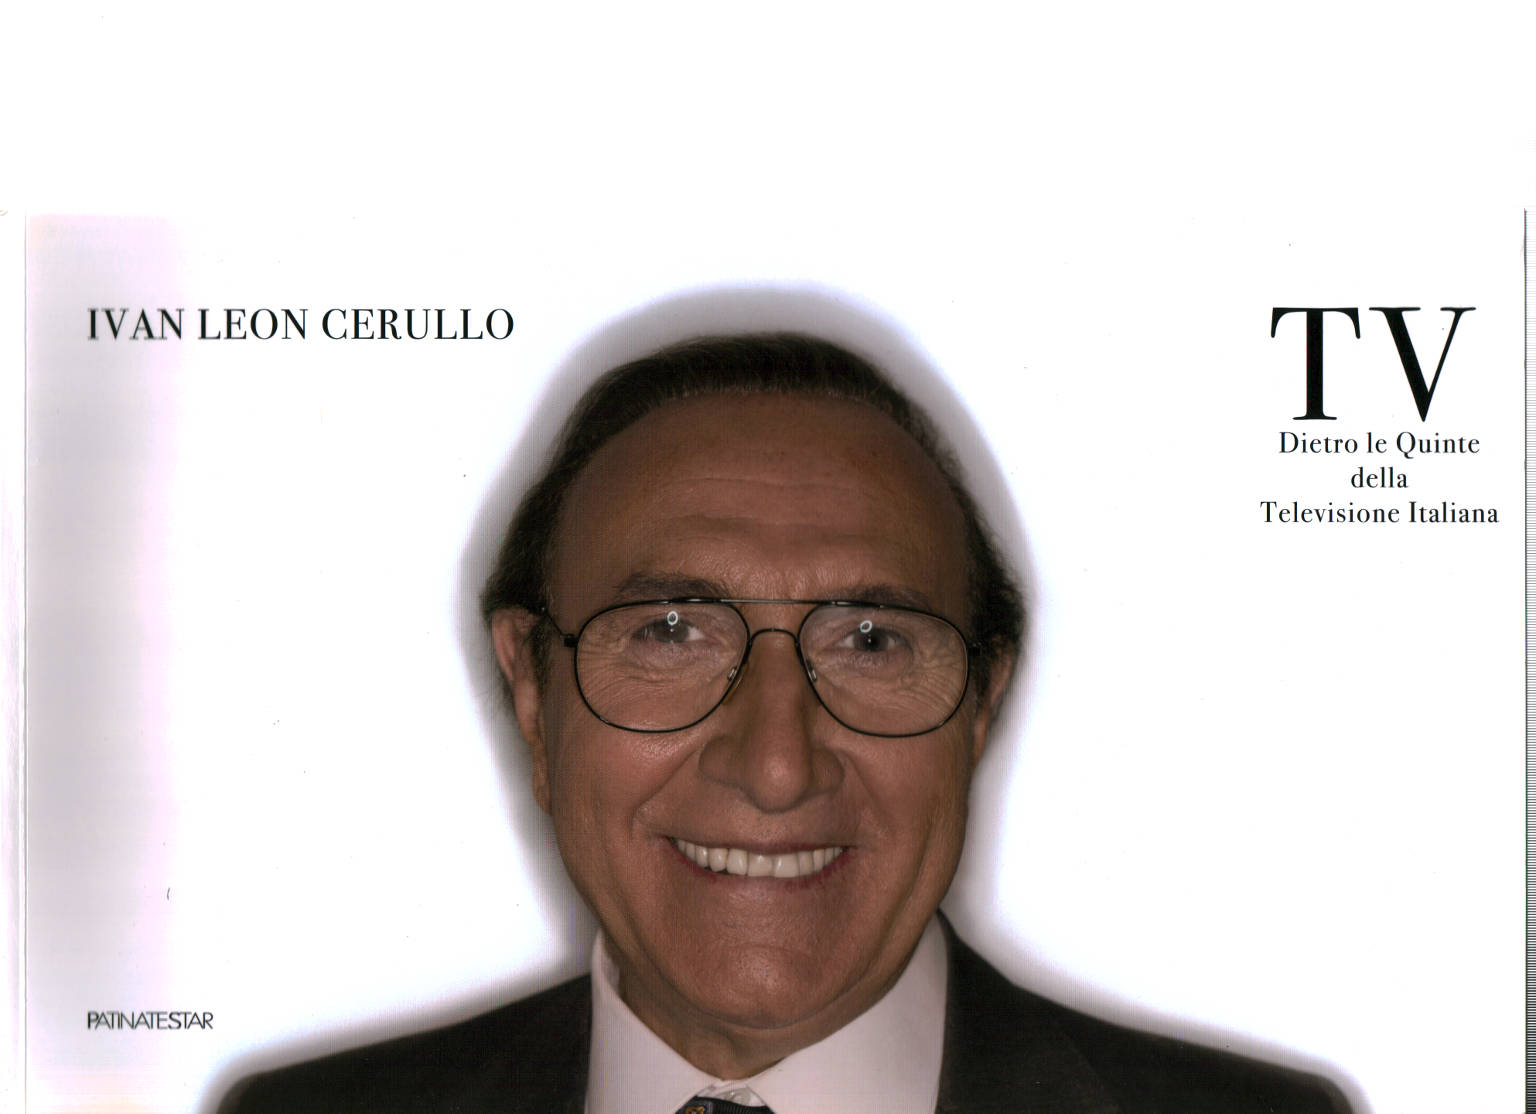 TV. Behind the Scenes of the Italian Television, Ivan Leon Cerullo